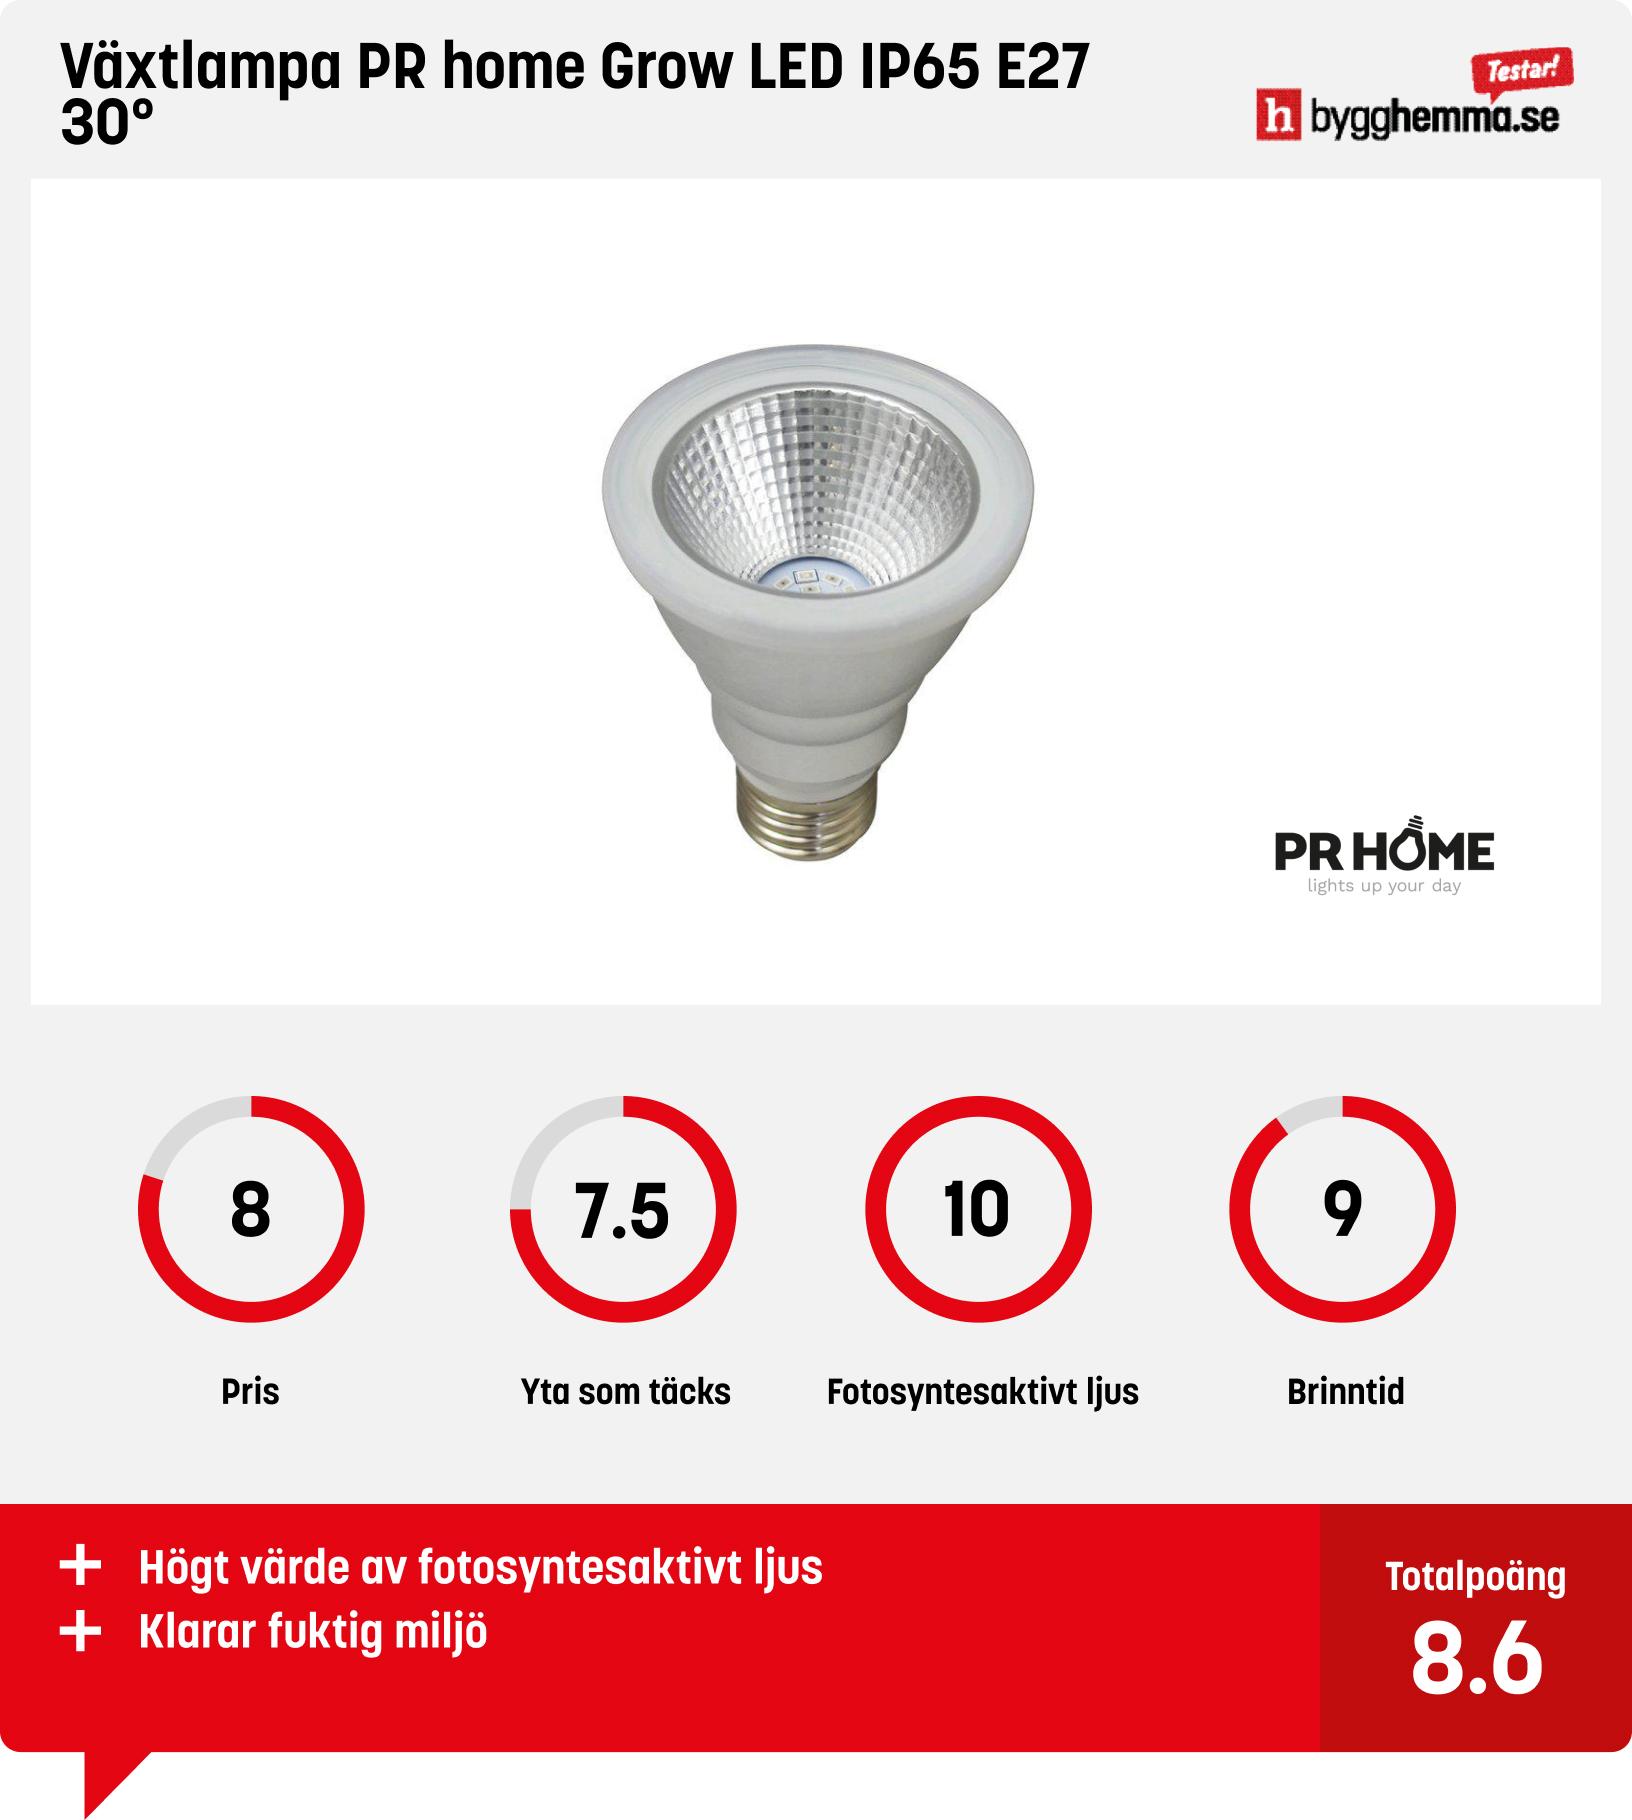 Växtbelysning bäst i test - Växtlampa PR home Grow LED IP65 E27 30°